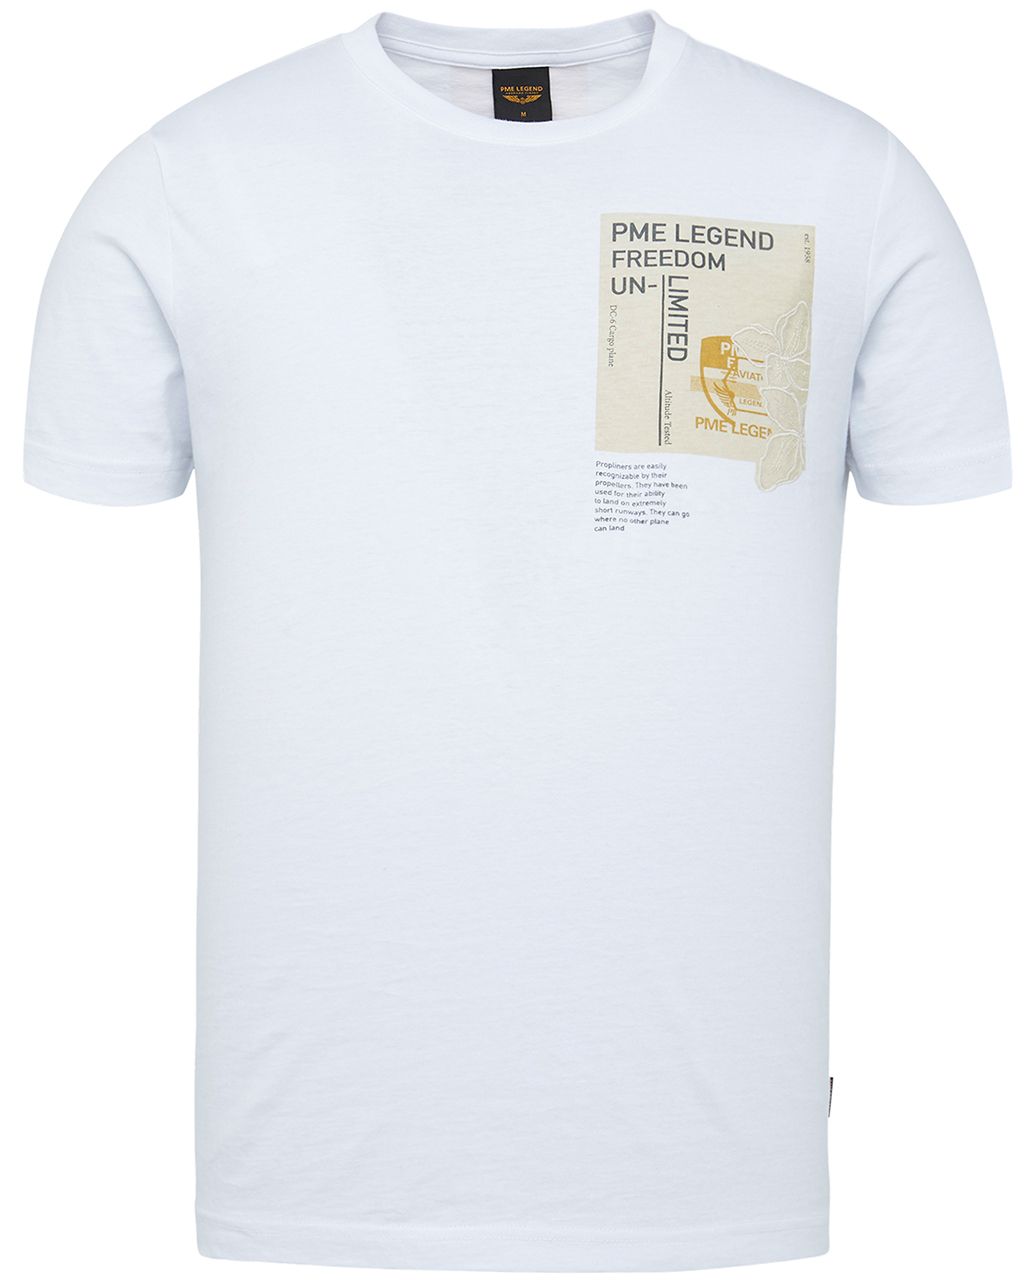 Onaangeroerd Voetganger Woedend PME Legend T-shirt KM | Shop nu - Only for Men